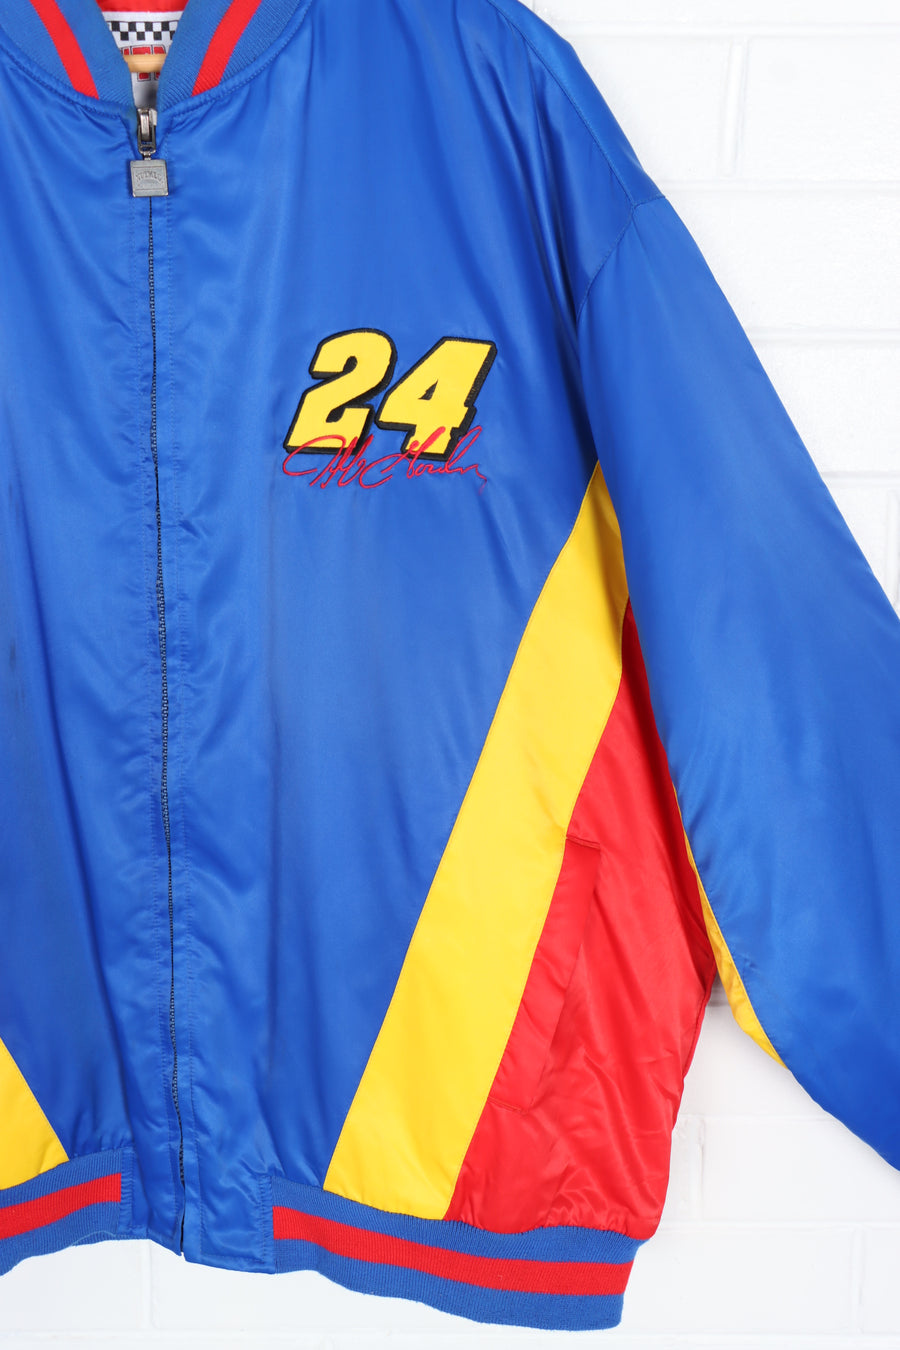 NUTMEG NASCAR Jeff Gordon Embroidered Full Zip Racing Jacket (XXXL)